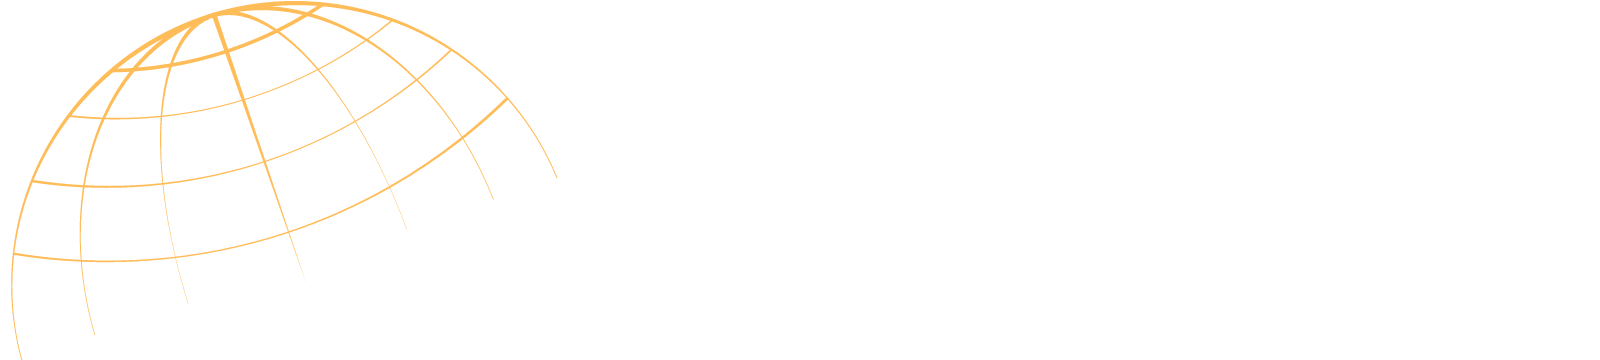 EX-World